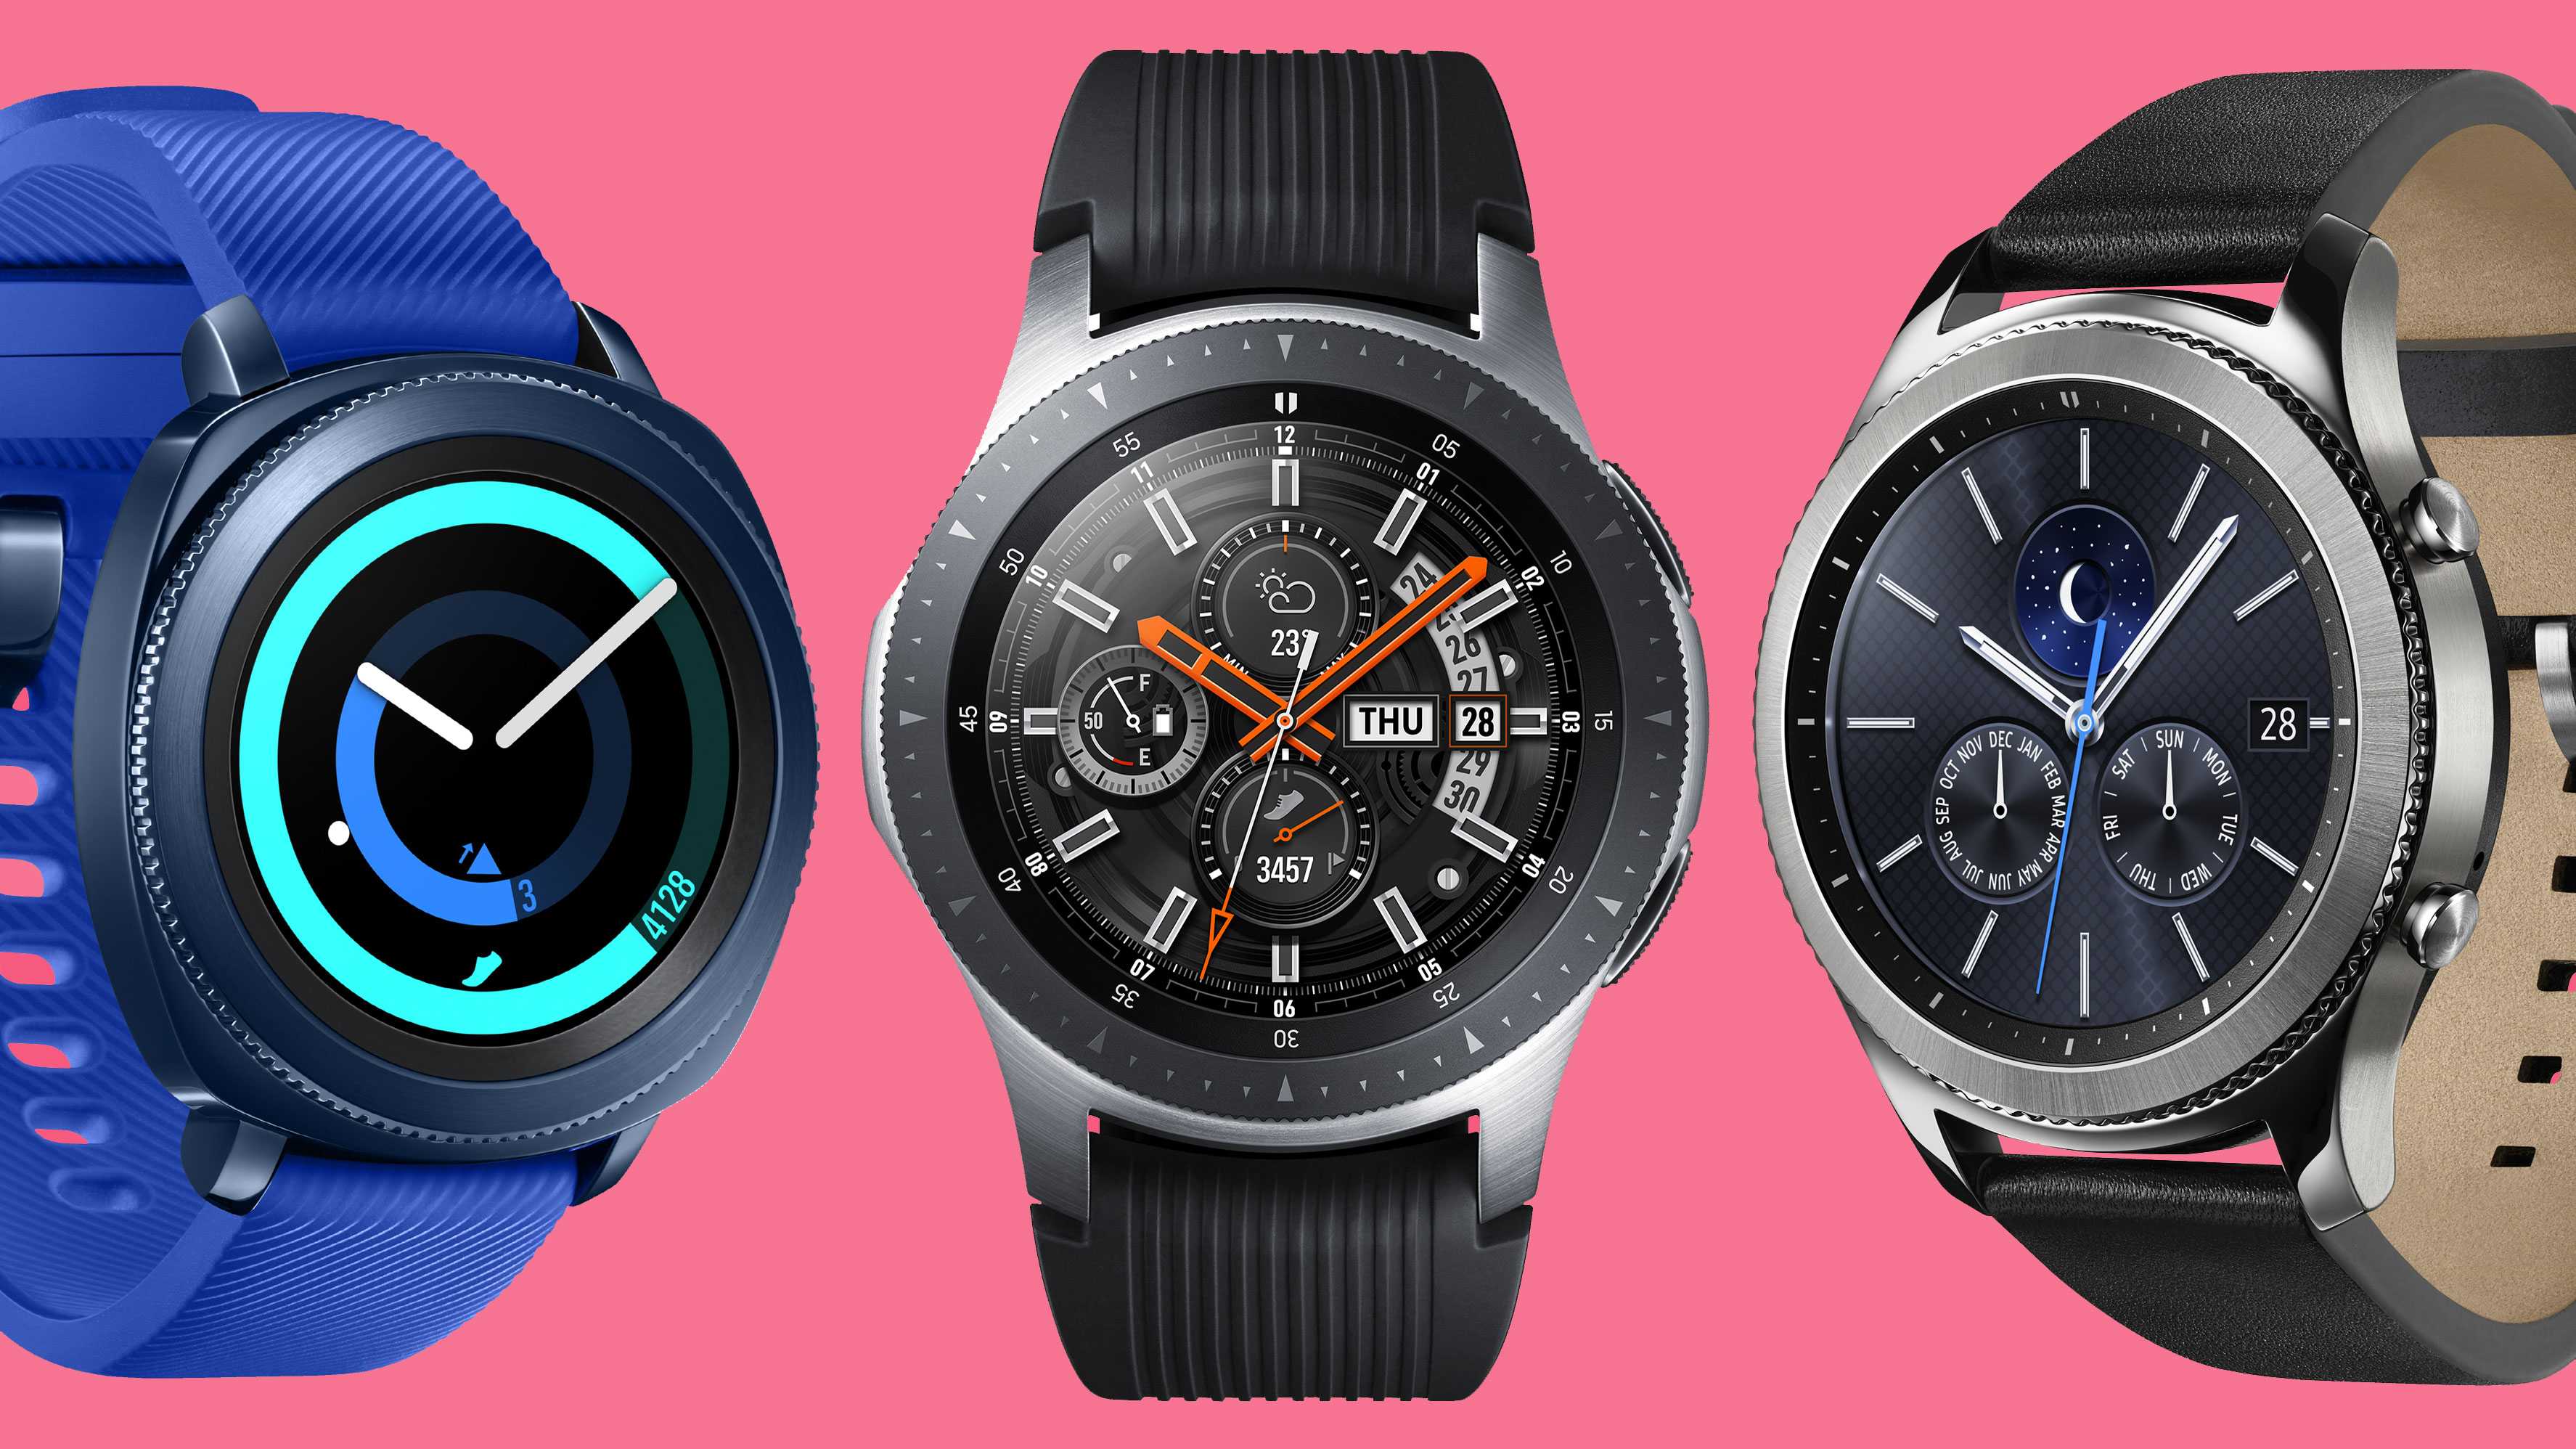 Samsung watch 5 classic. Samsung Galaxy watch SM-r800. Часы Samsung Galaxy watch. Смарт часы самсунг вотч 5. Часы самсунг галакси вотч 3.